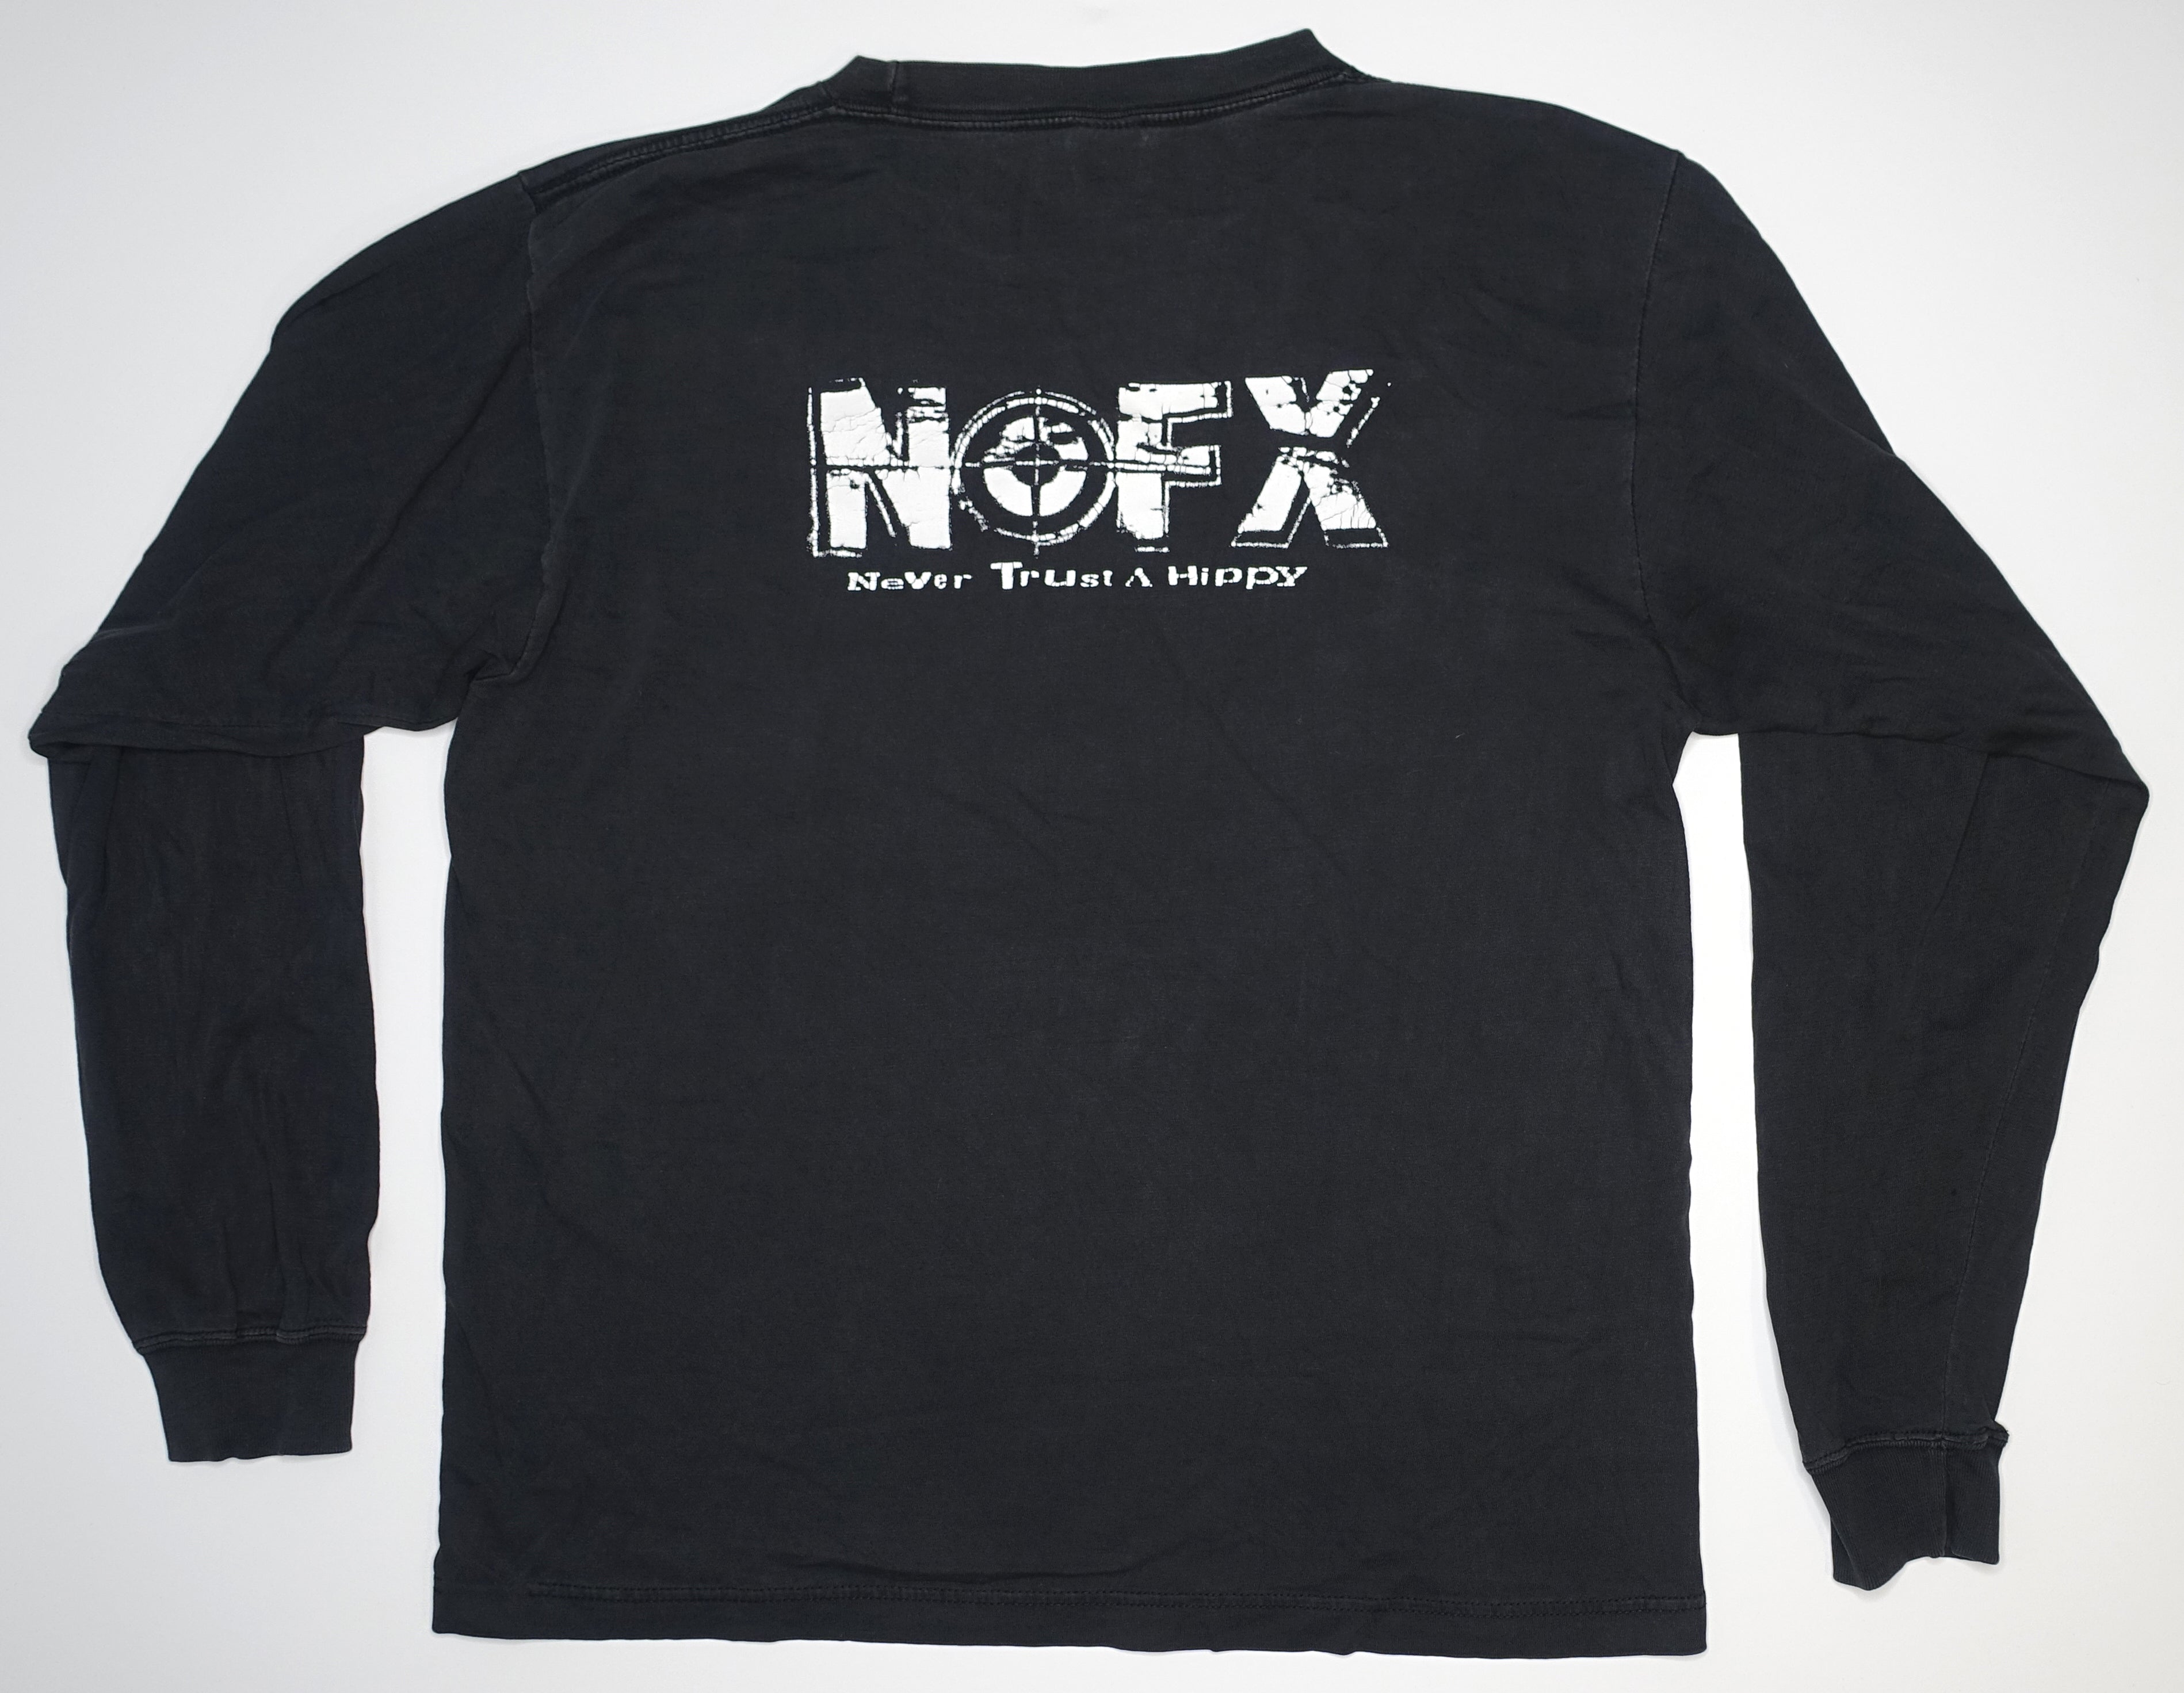 NOFX - Never Trust A Hippie 2006 Long Sleeve Tour Shirt Size Large